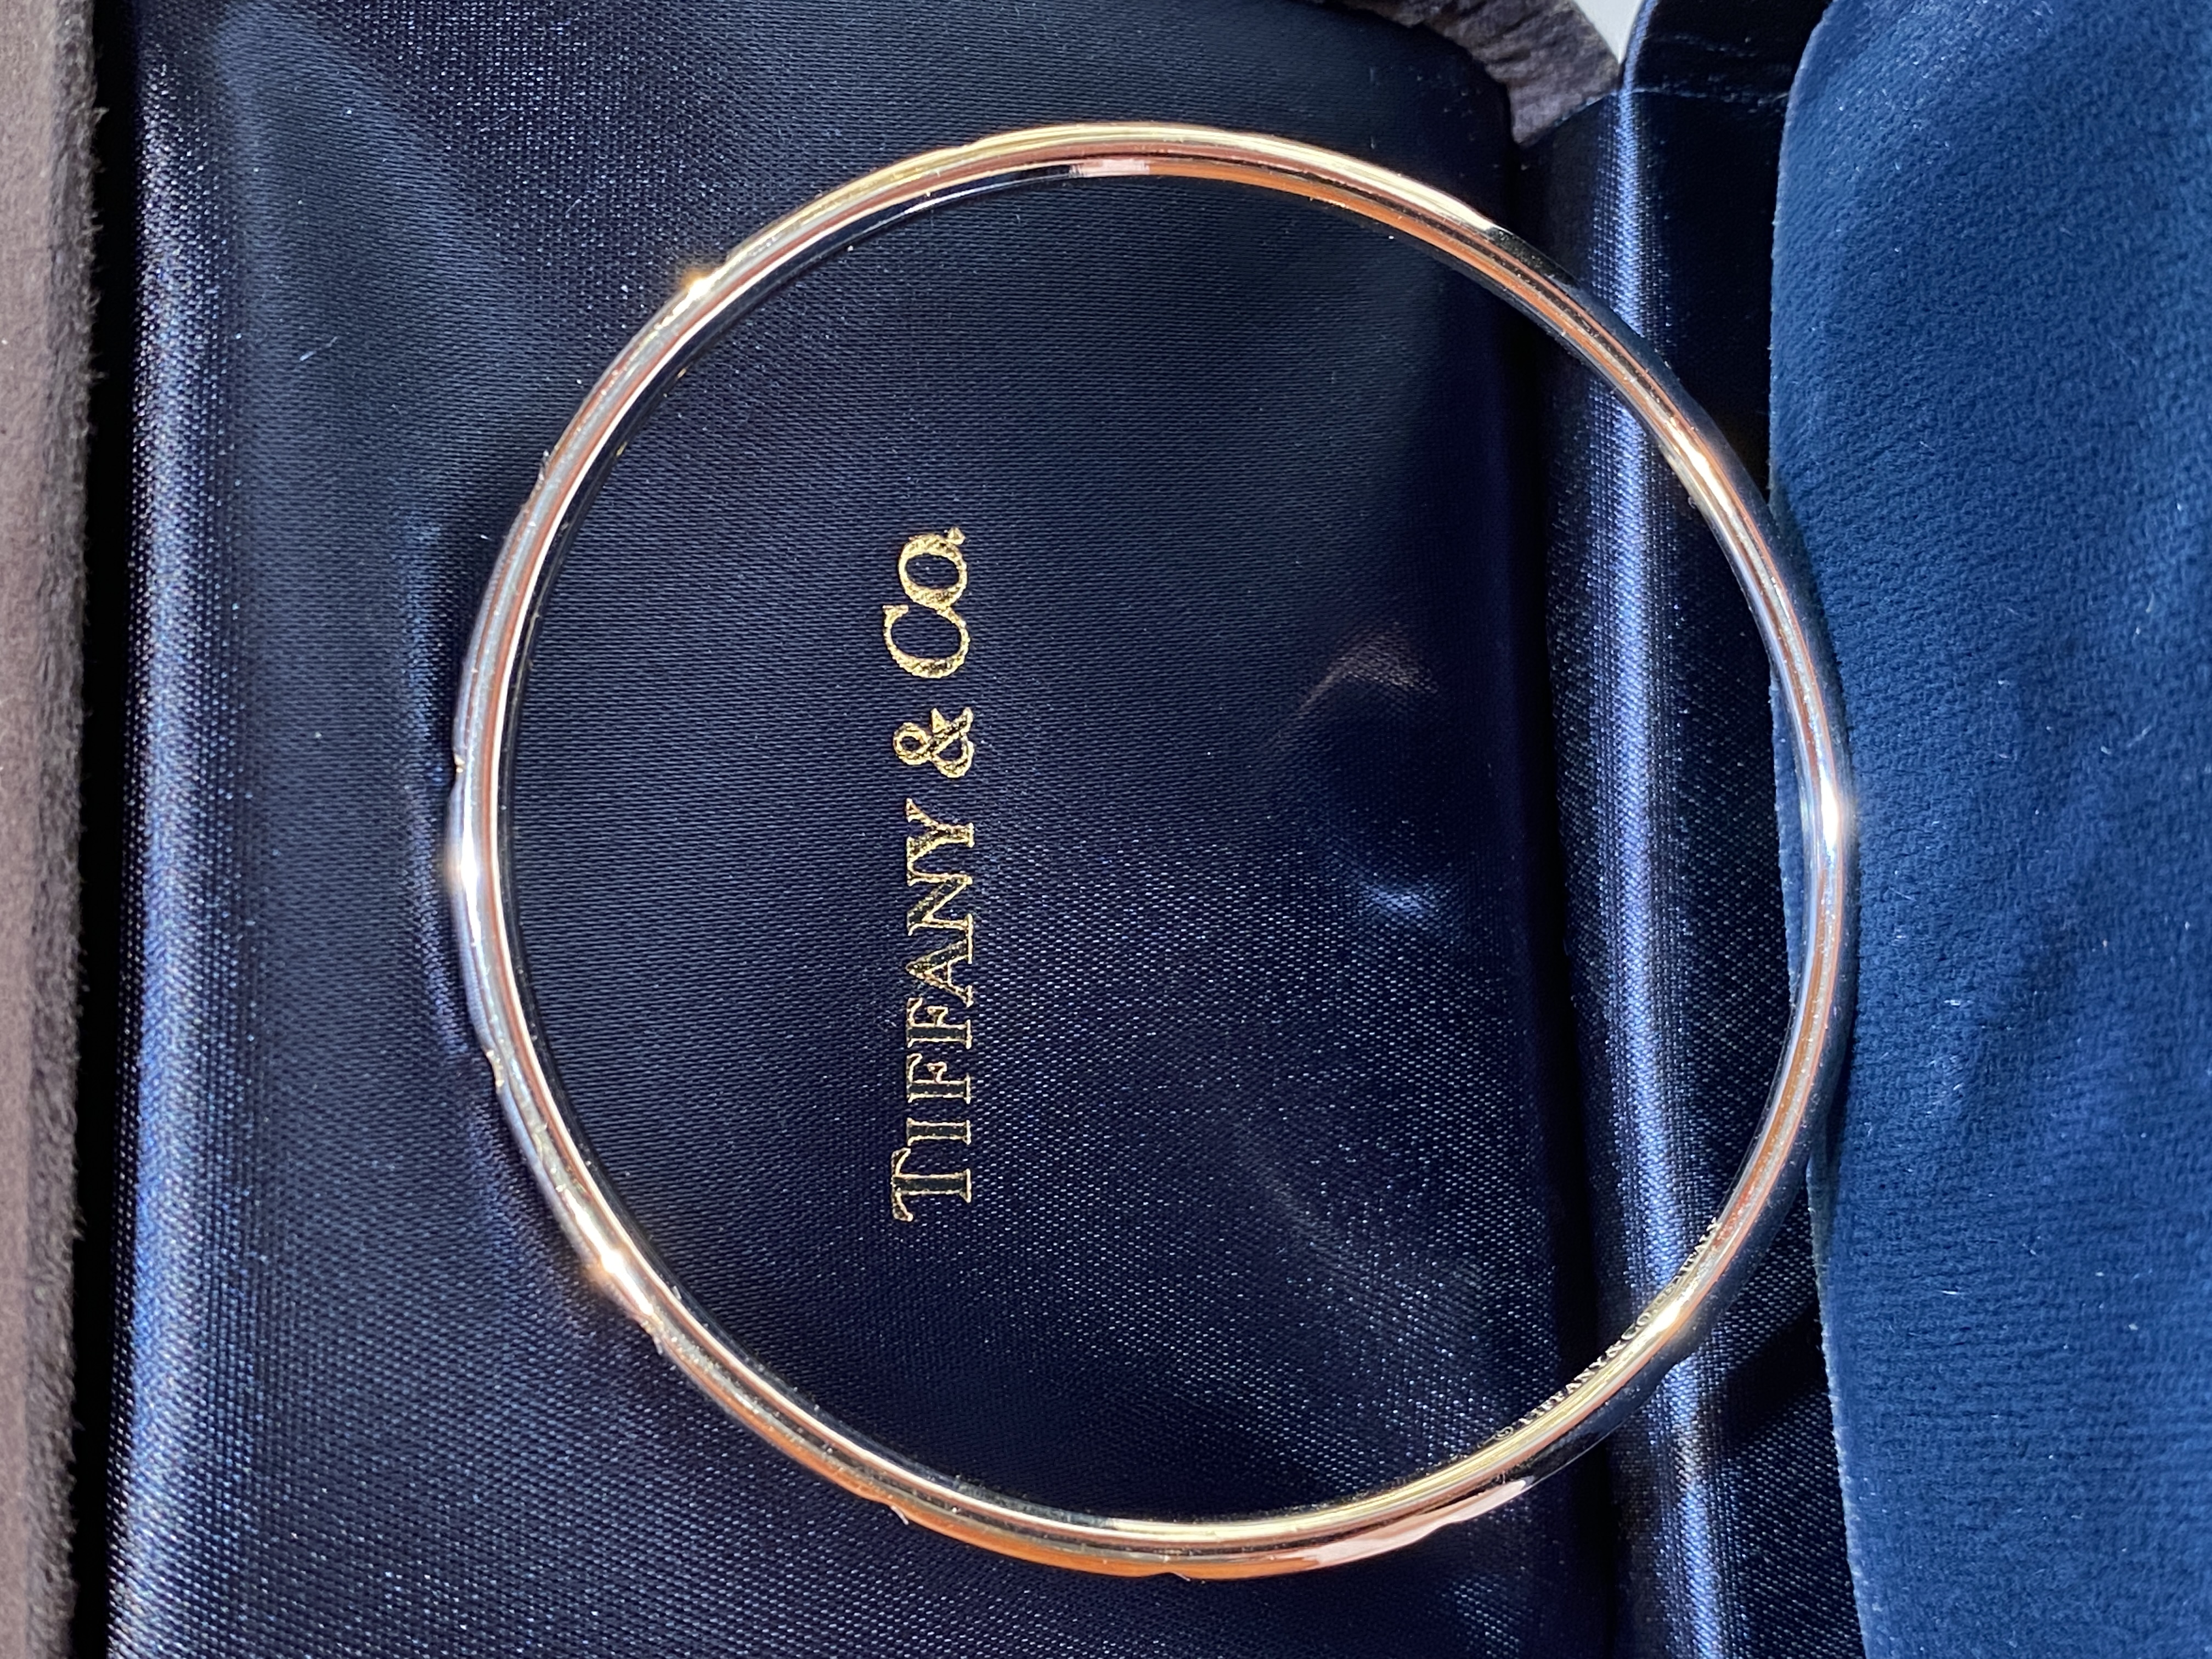 Original Tiffany & Co. 18K 750 white gold bangle with diamonds